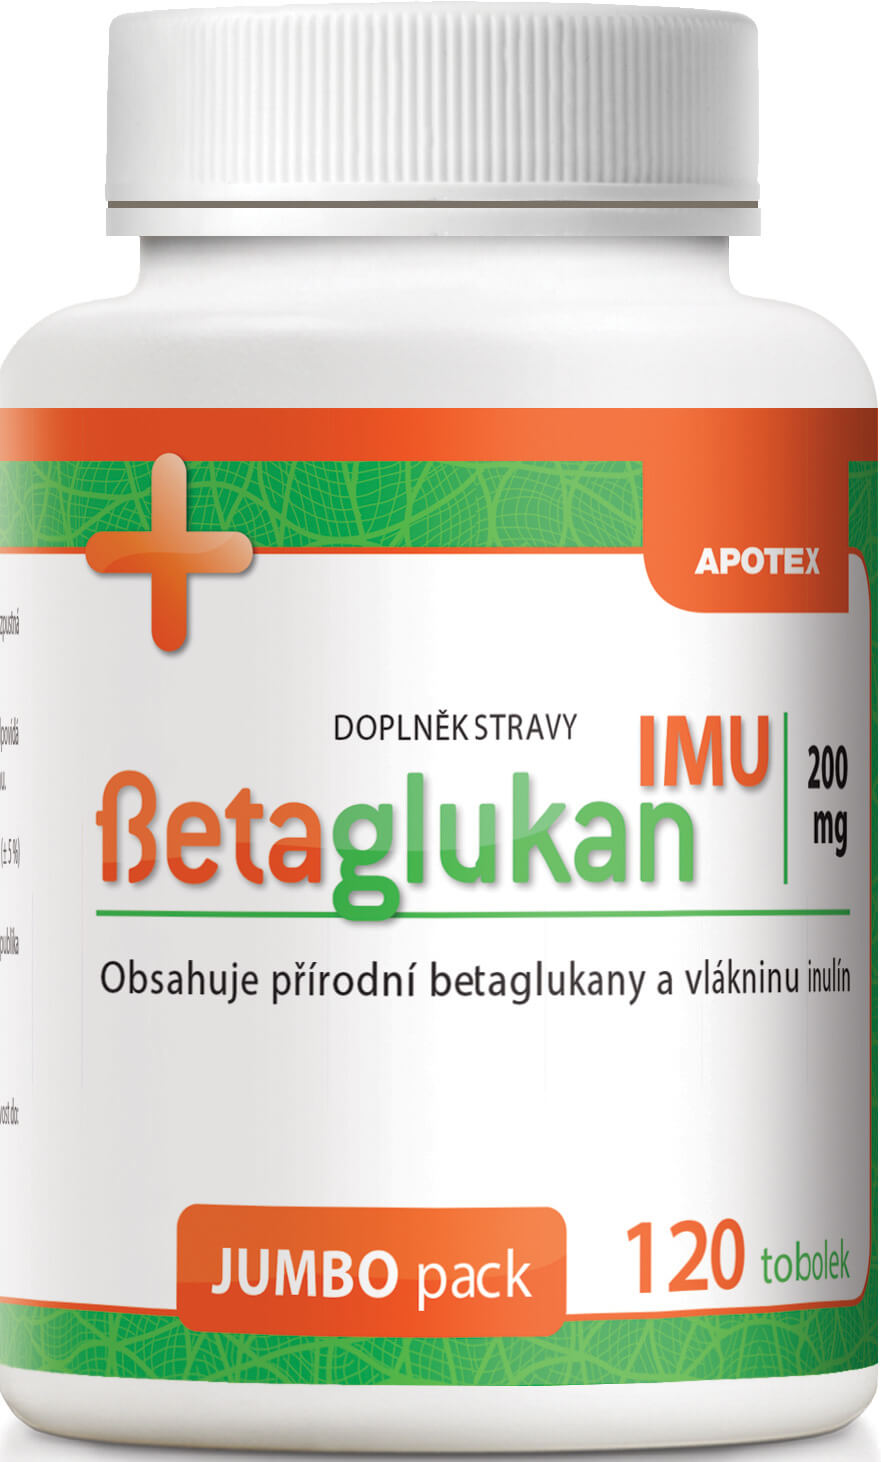 Aurovitas Betaglukan IMU 200 mg 120 tob.